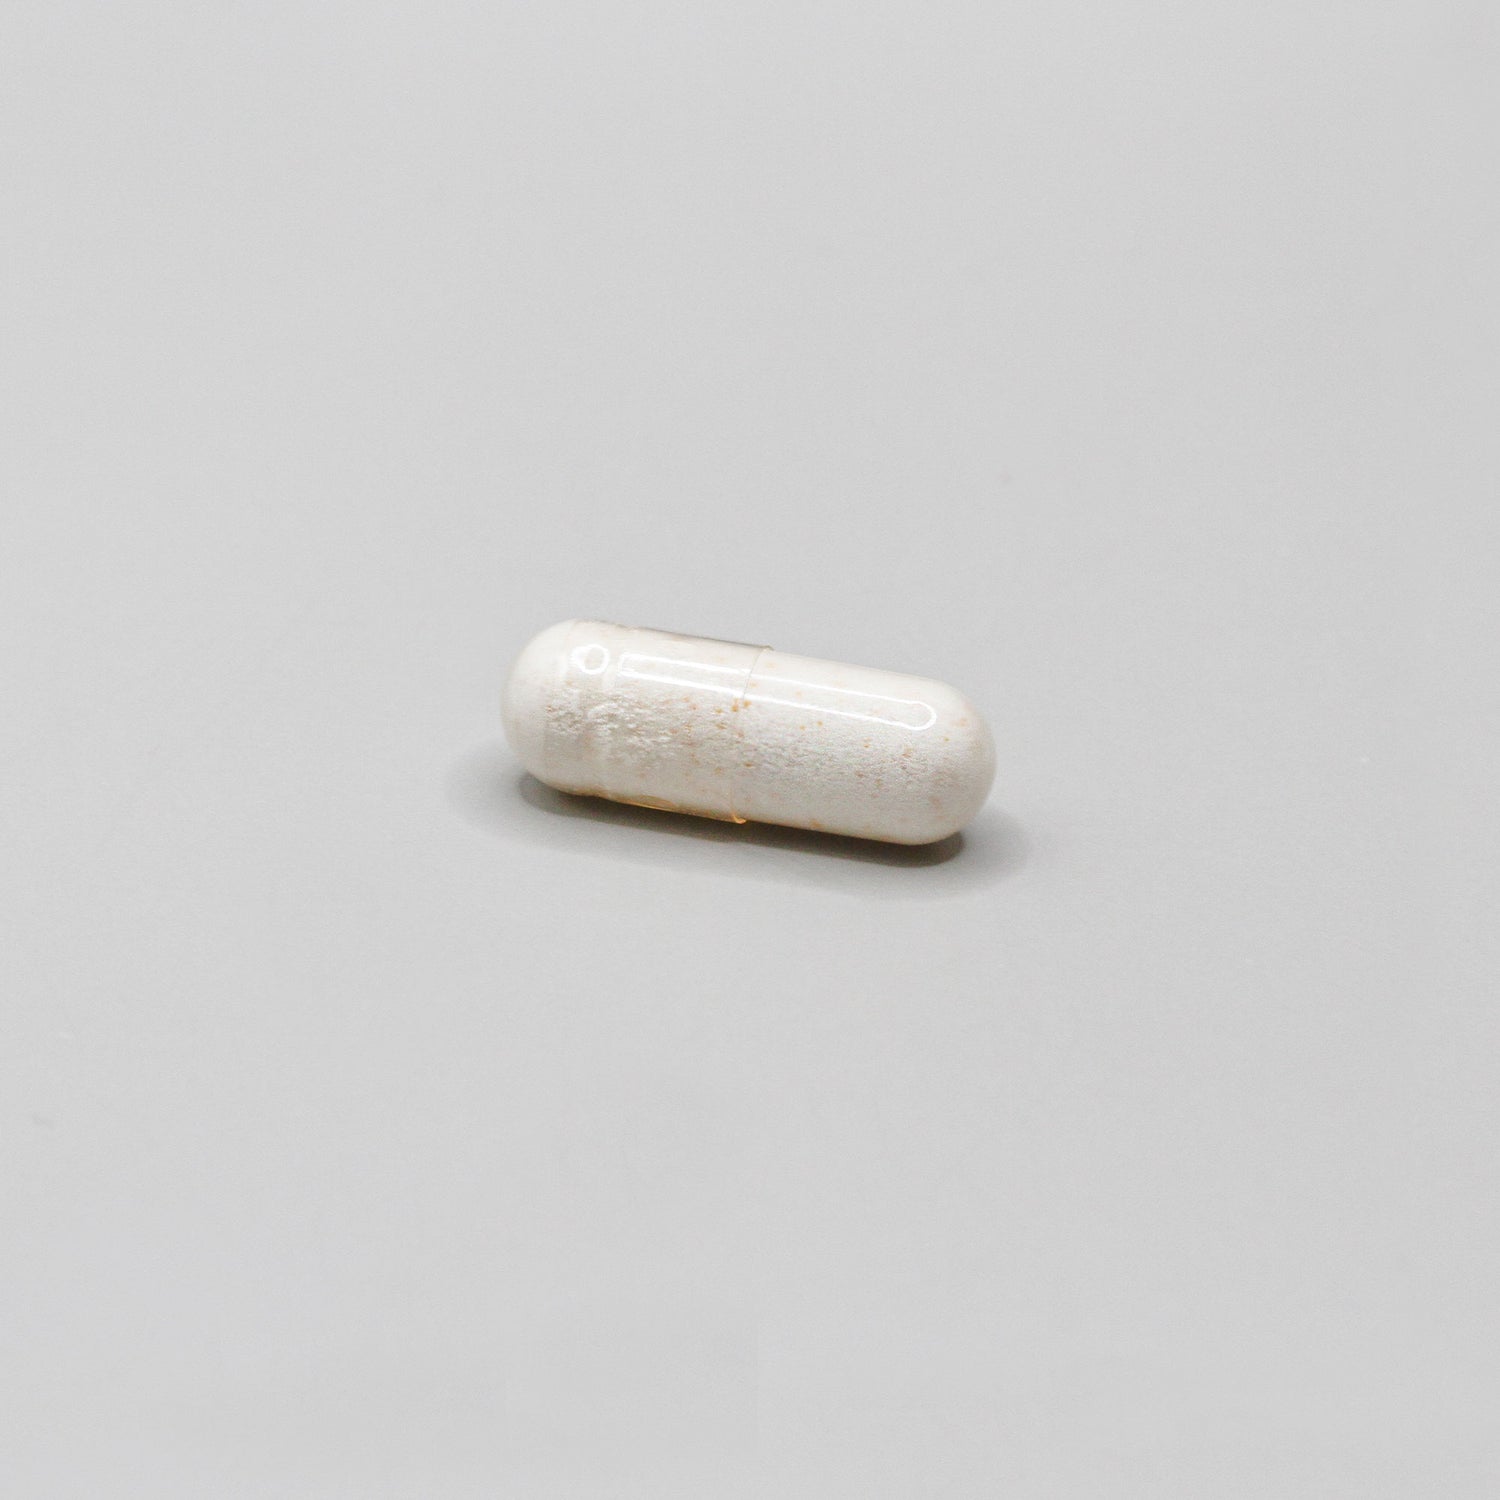 White pill